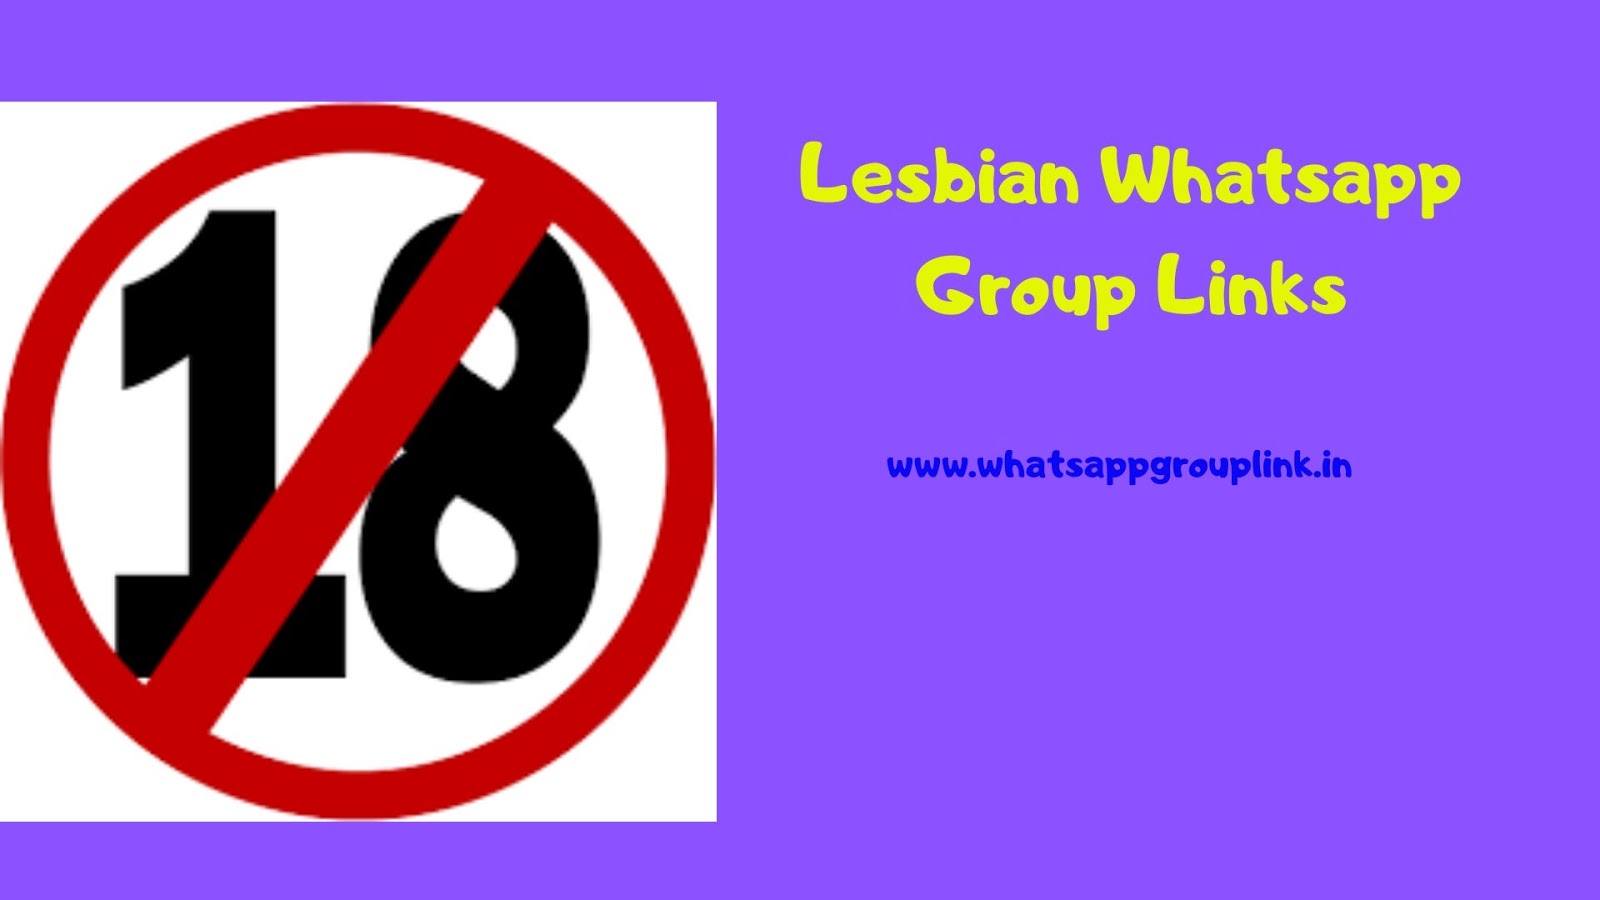 Adult whatsapp chat - lesbian groups